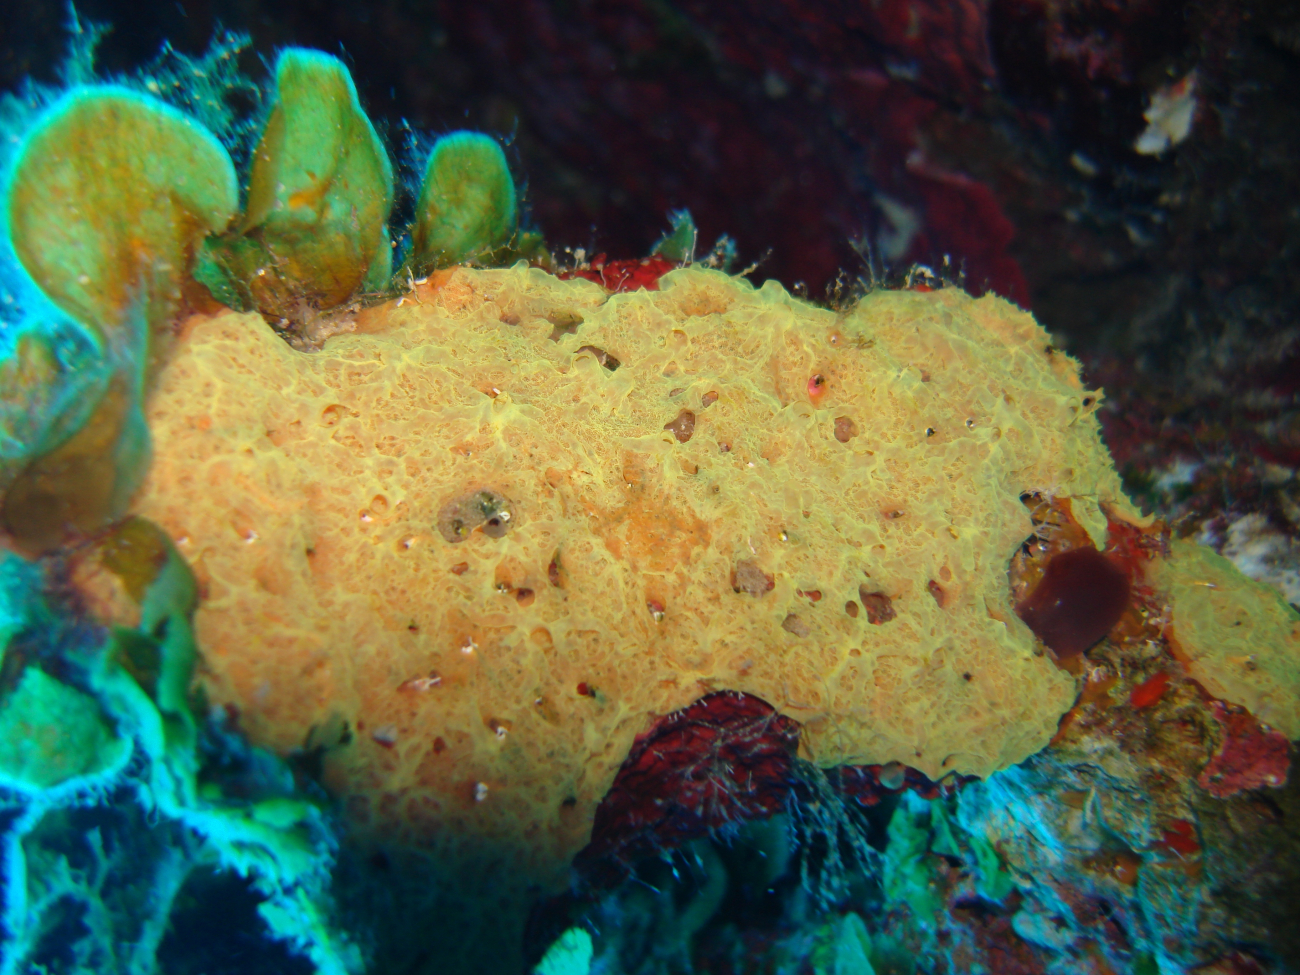 Sponge (Clathria schoenus ?)